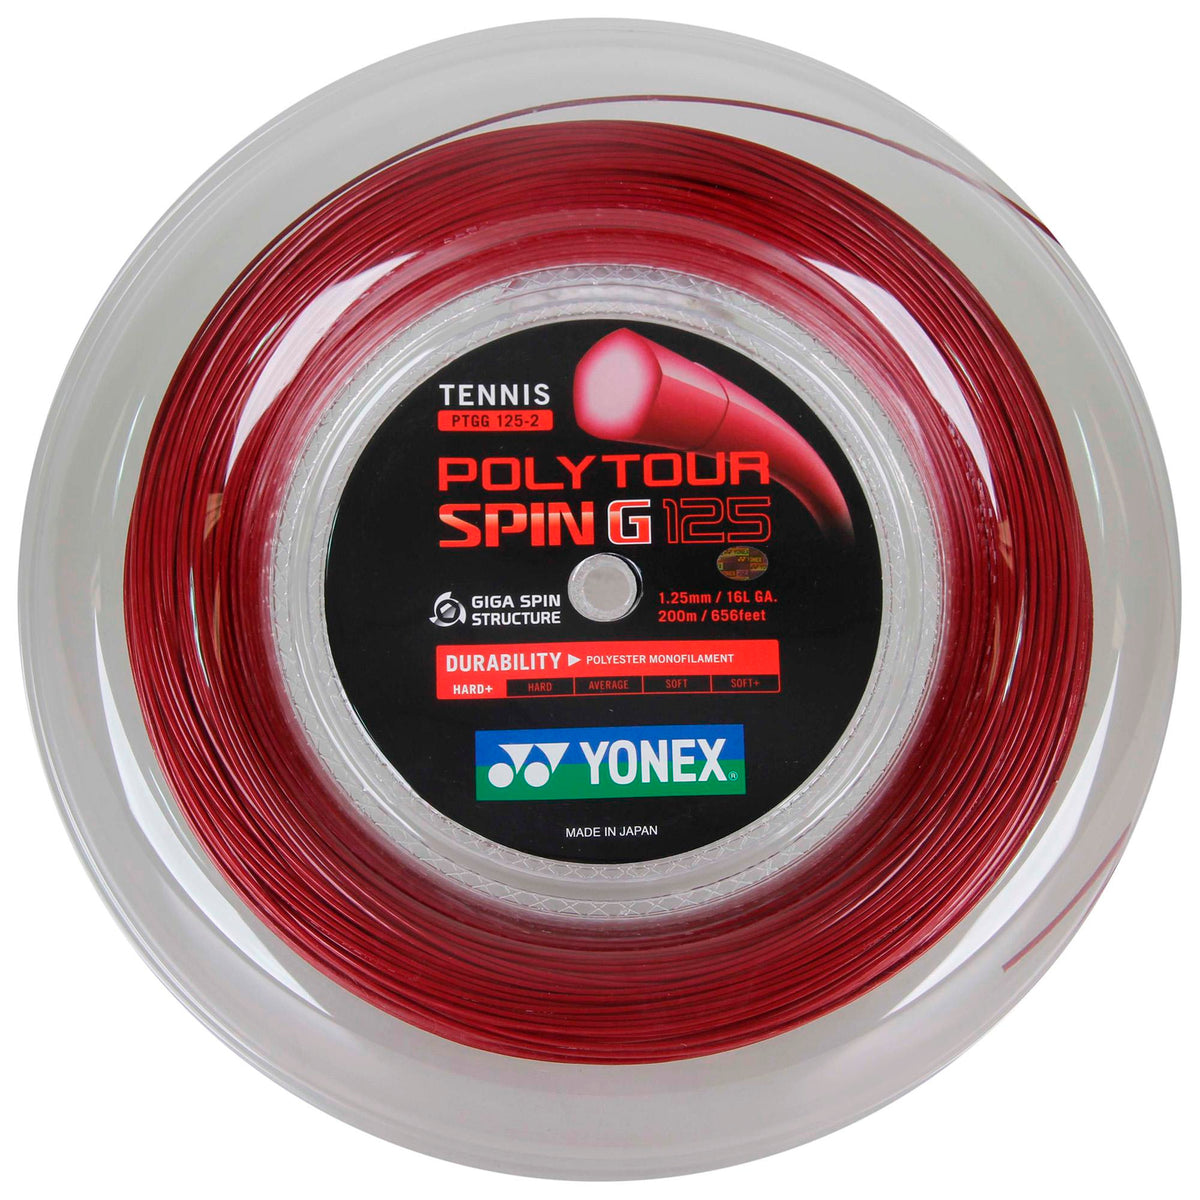 Yonex Polytour Spin G 1.25mm 200m Tennis String